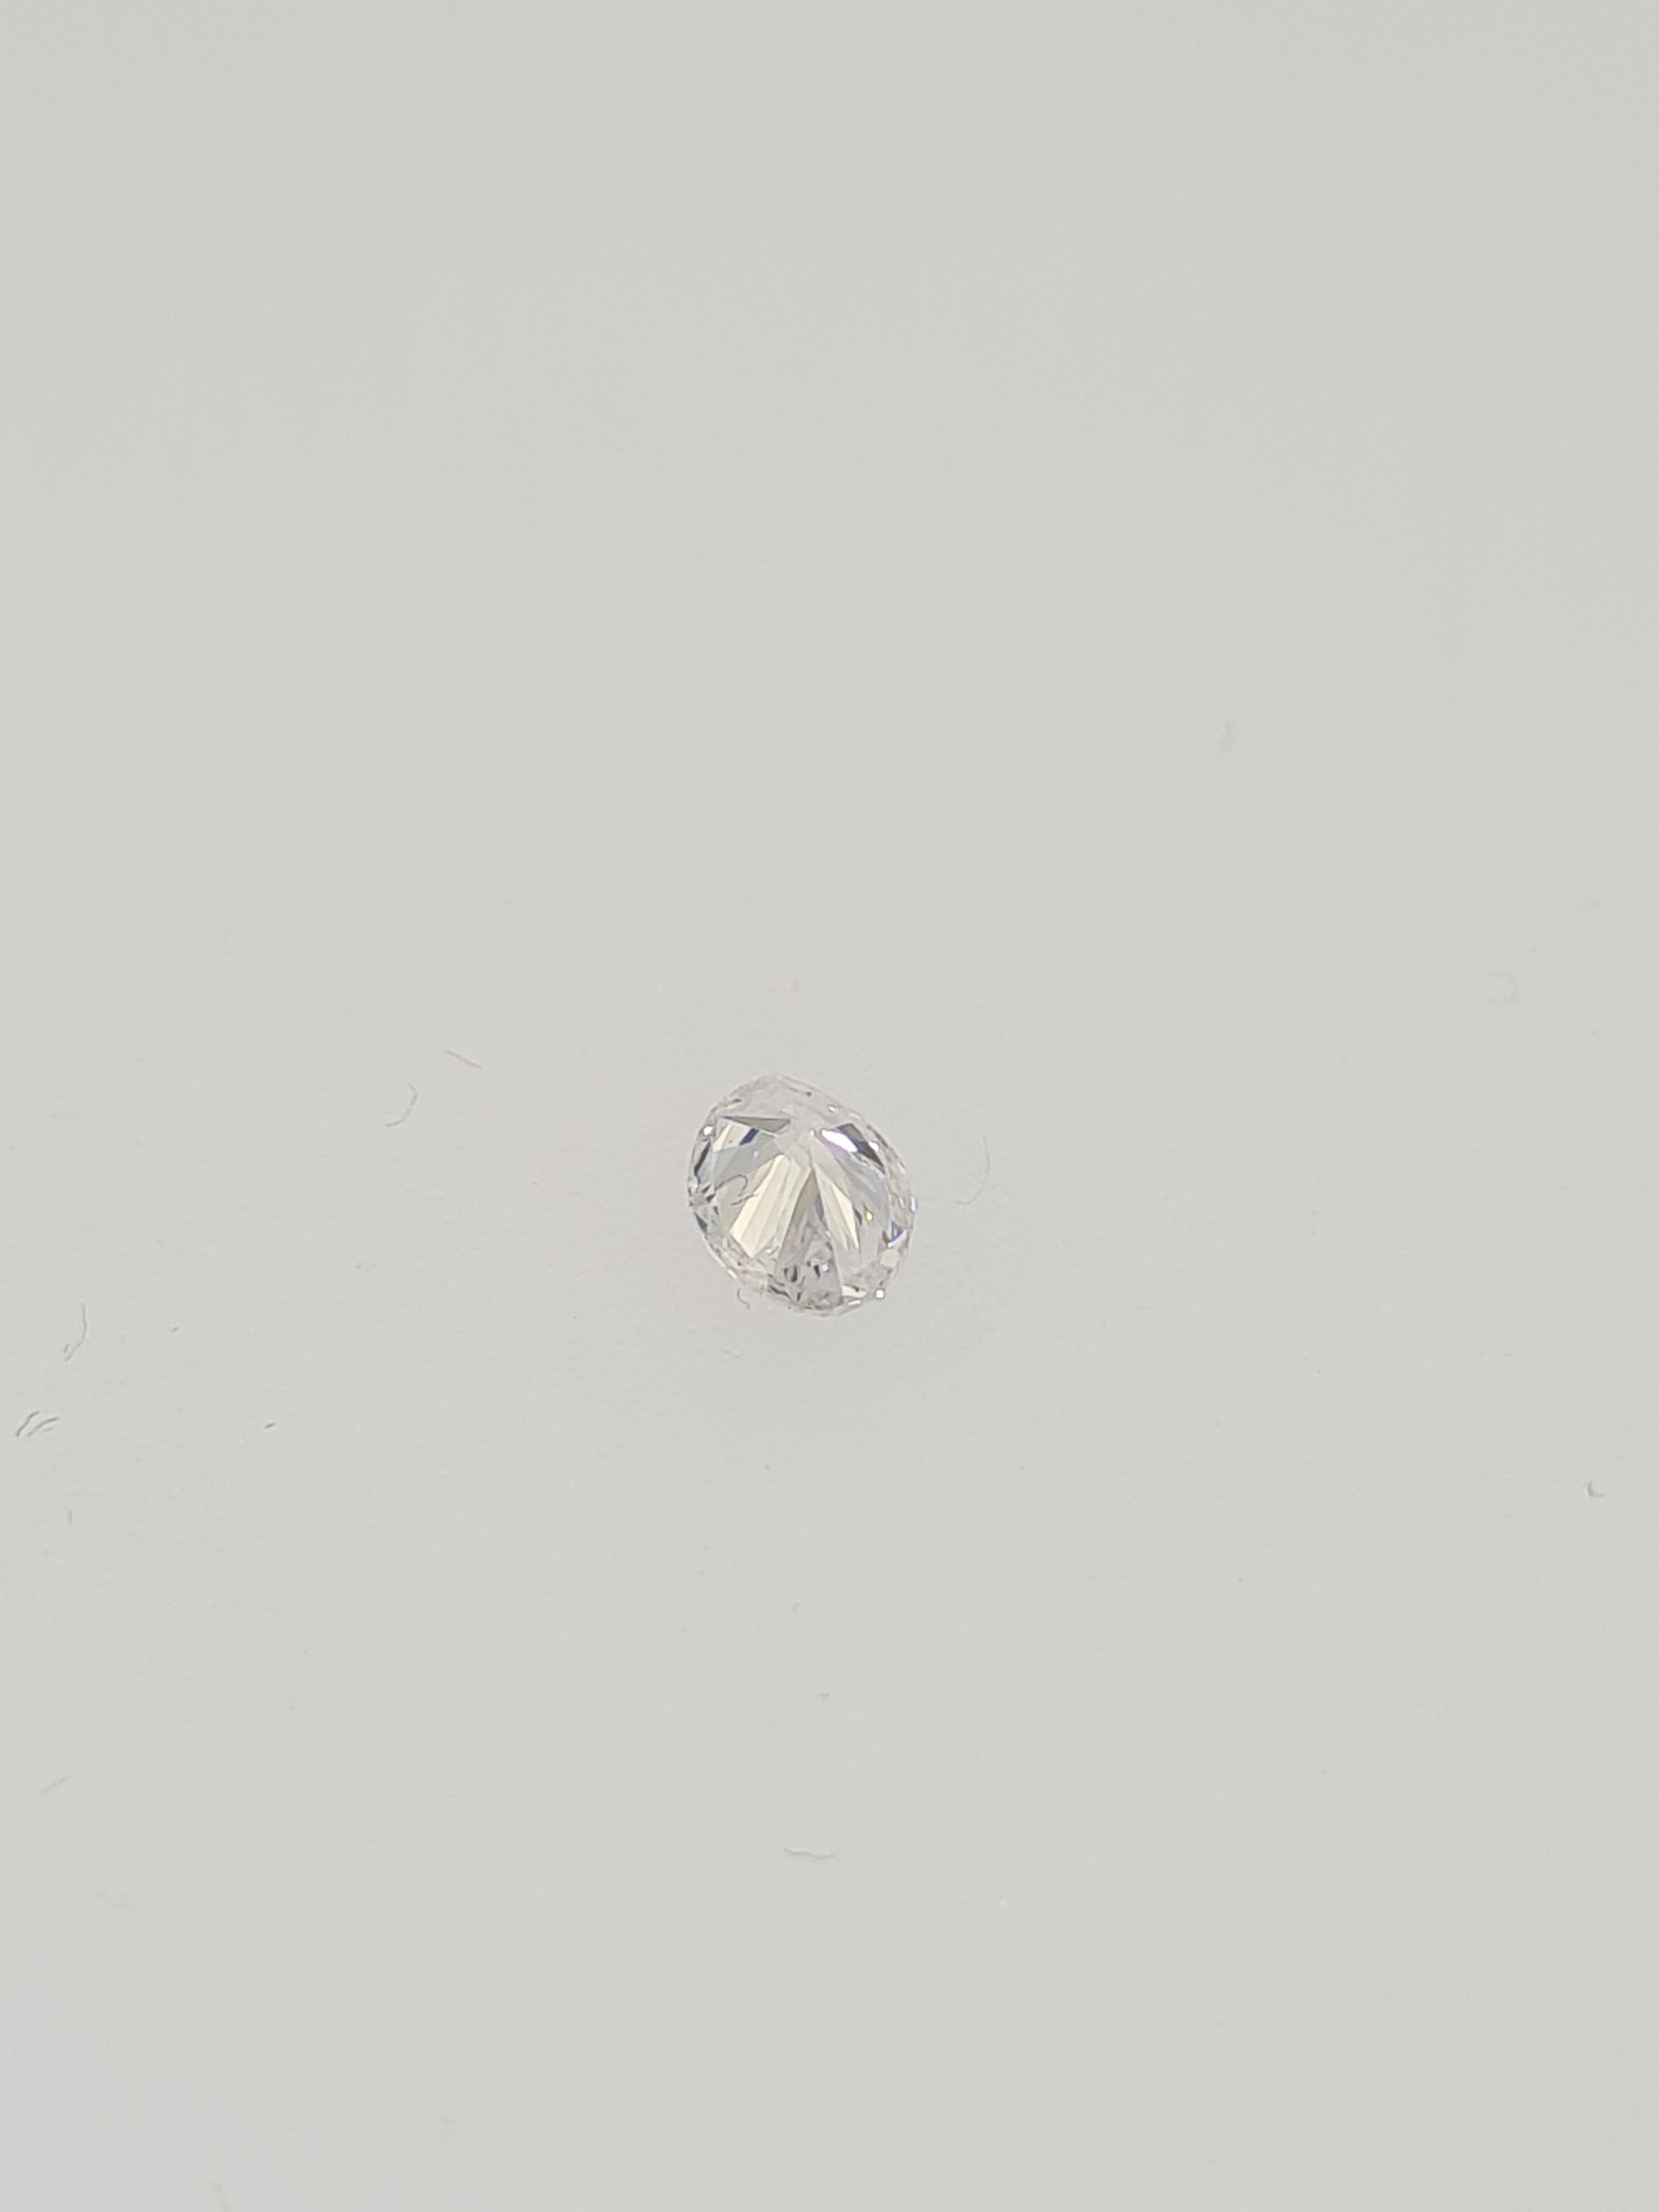 Oval cut diamond - Image 2 of 6